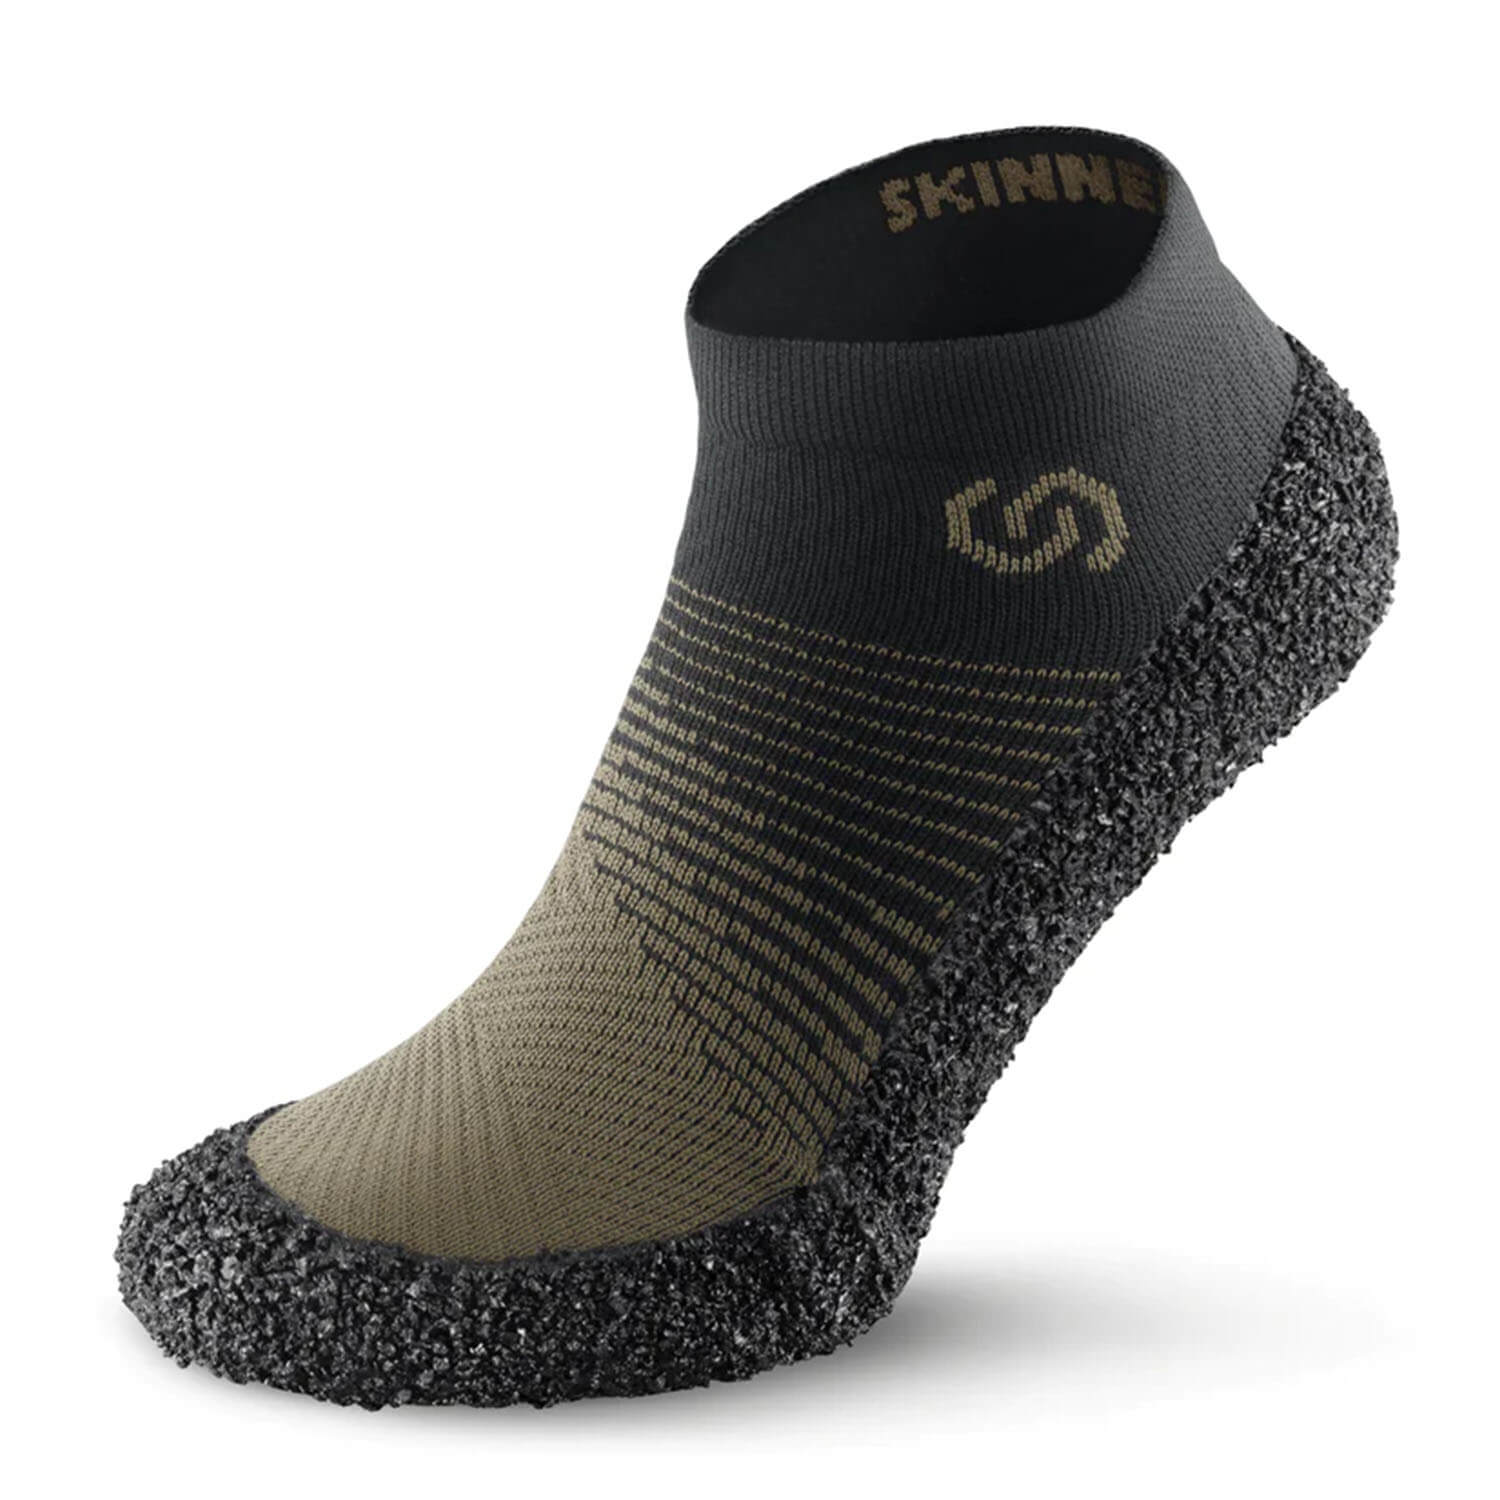 Skinners stalking socks Comfort 2.0 (Moss) - Hunting Boots